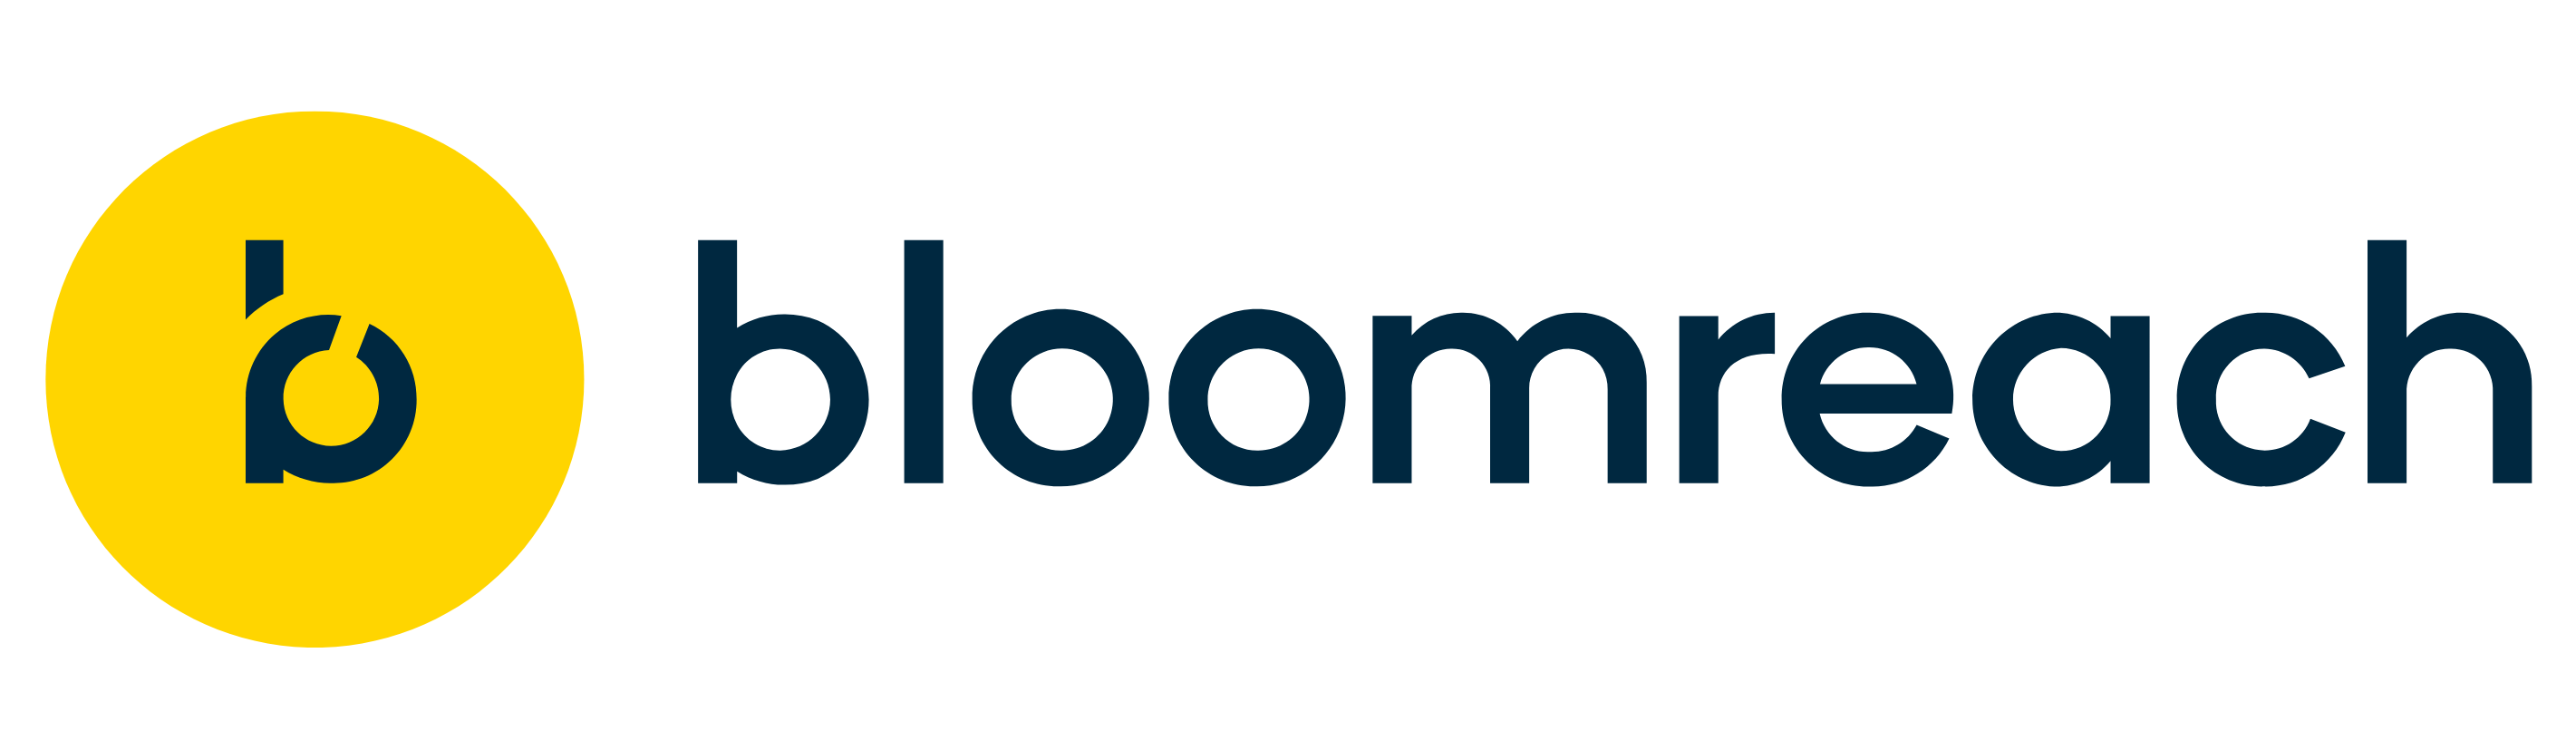 Bloomreach-logo